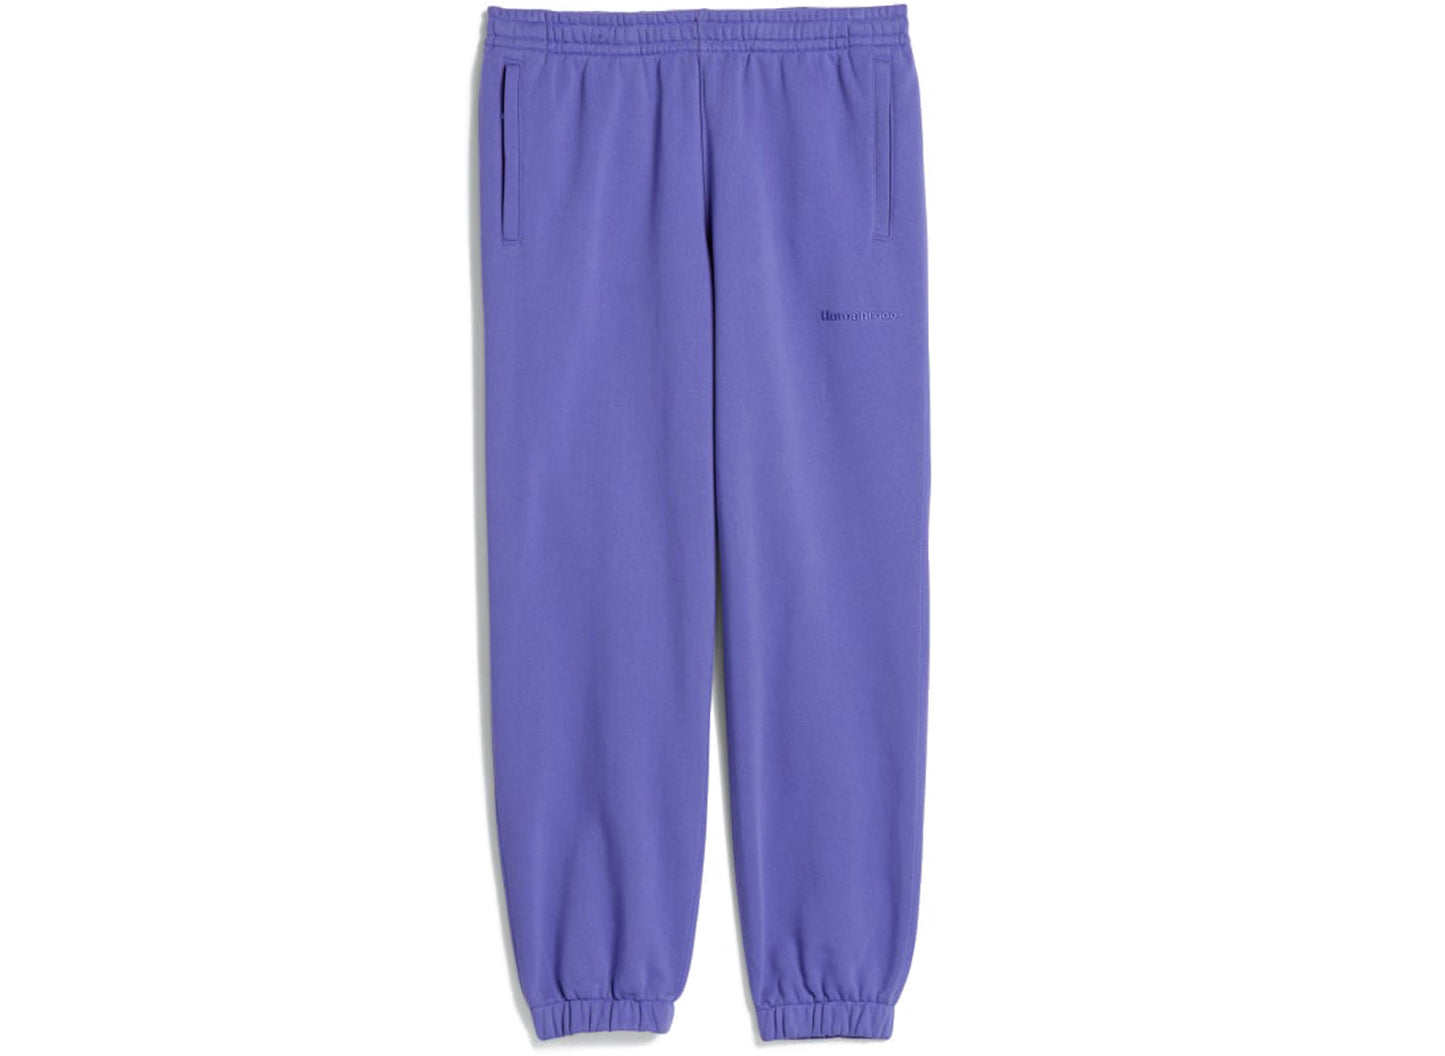 Adidas Pharrell Williams Basics Pants in Purple